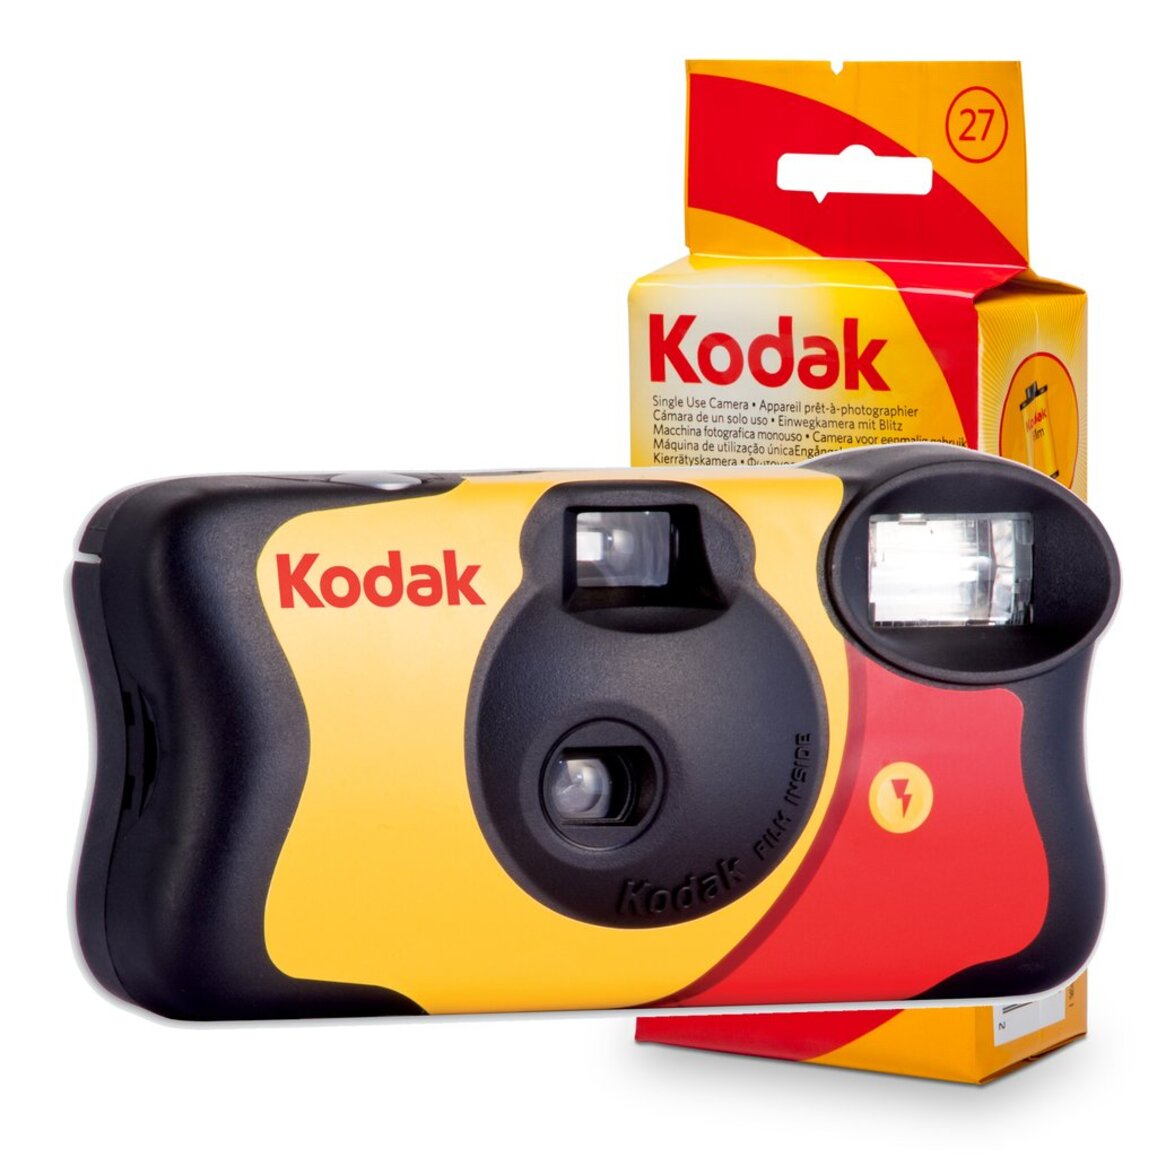 Kodak 1 time use funsaver camera